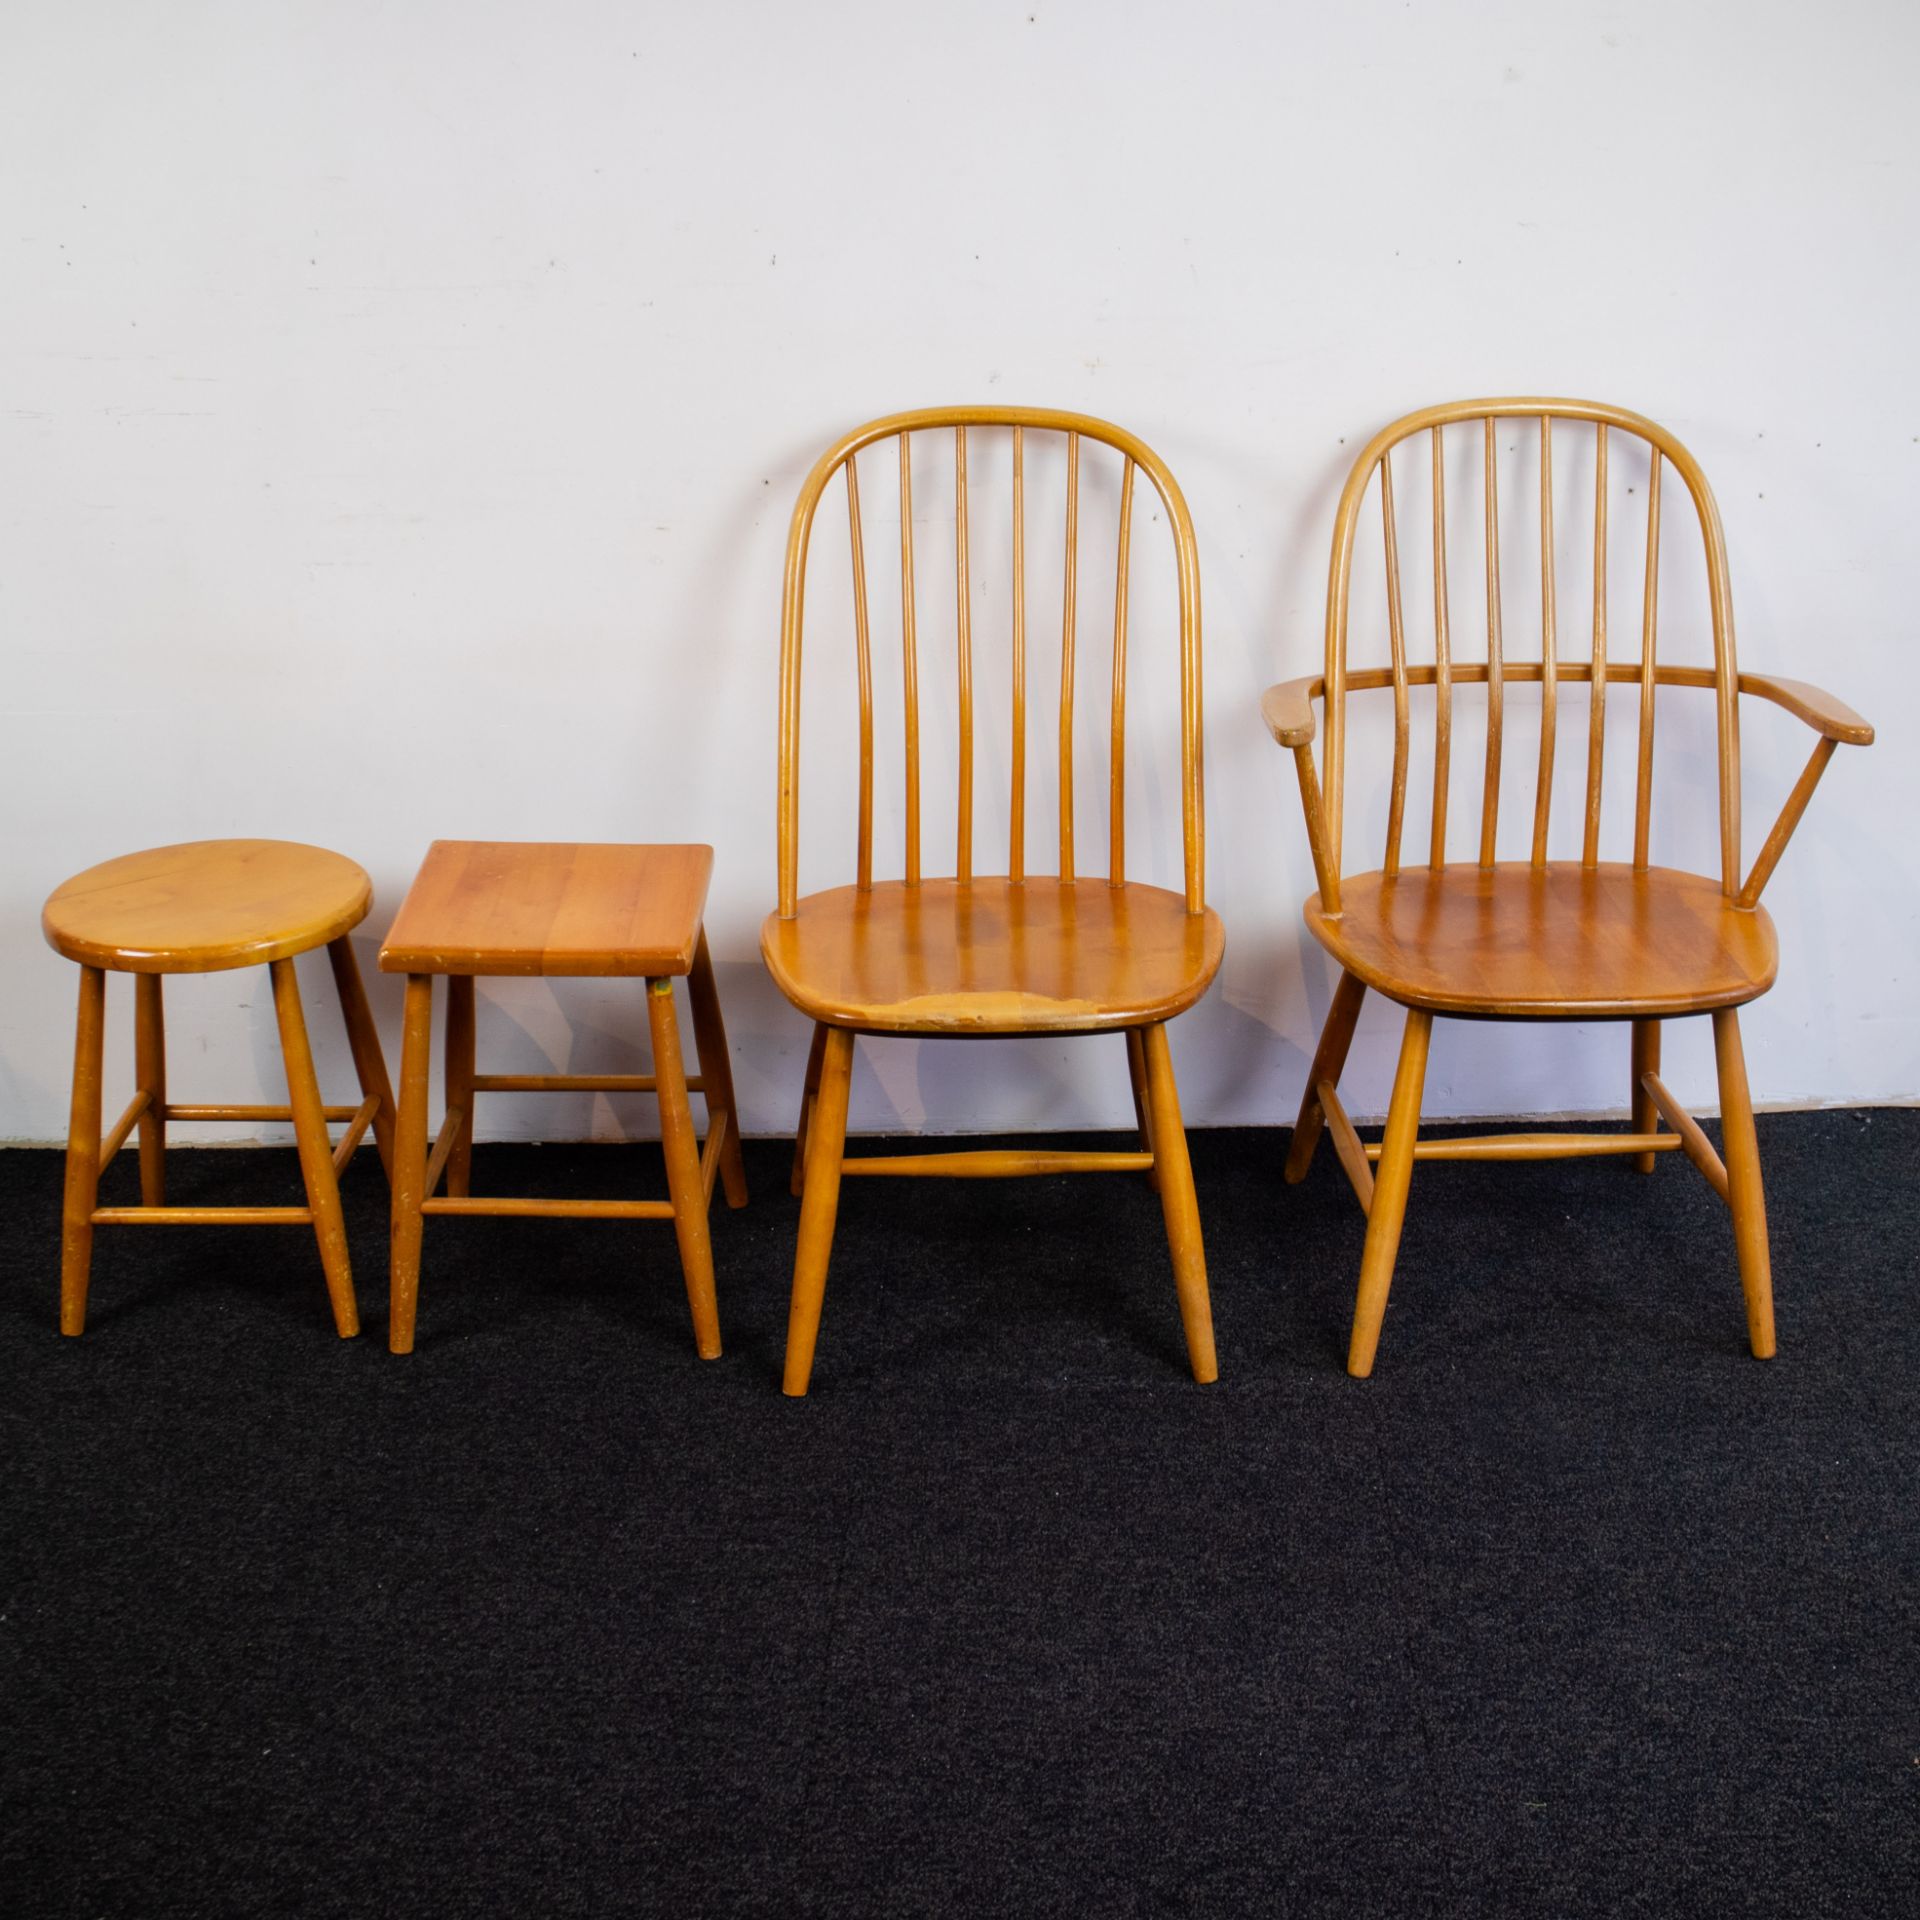 2 Akerblom Swedish fifties chair designed by Bengt Akerblom